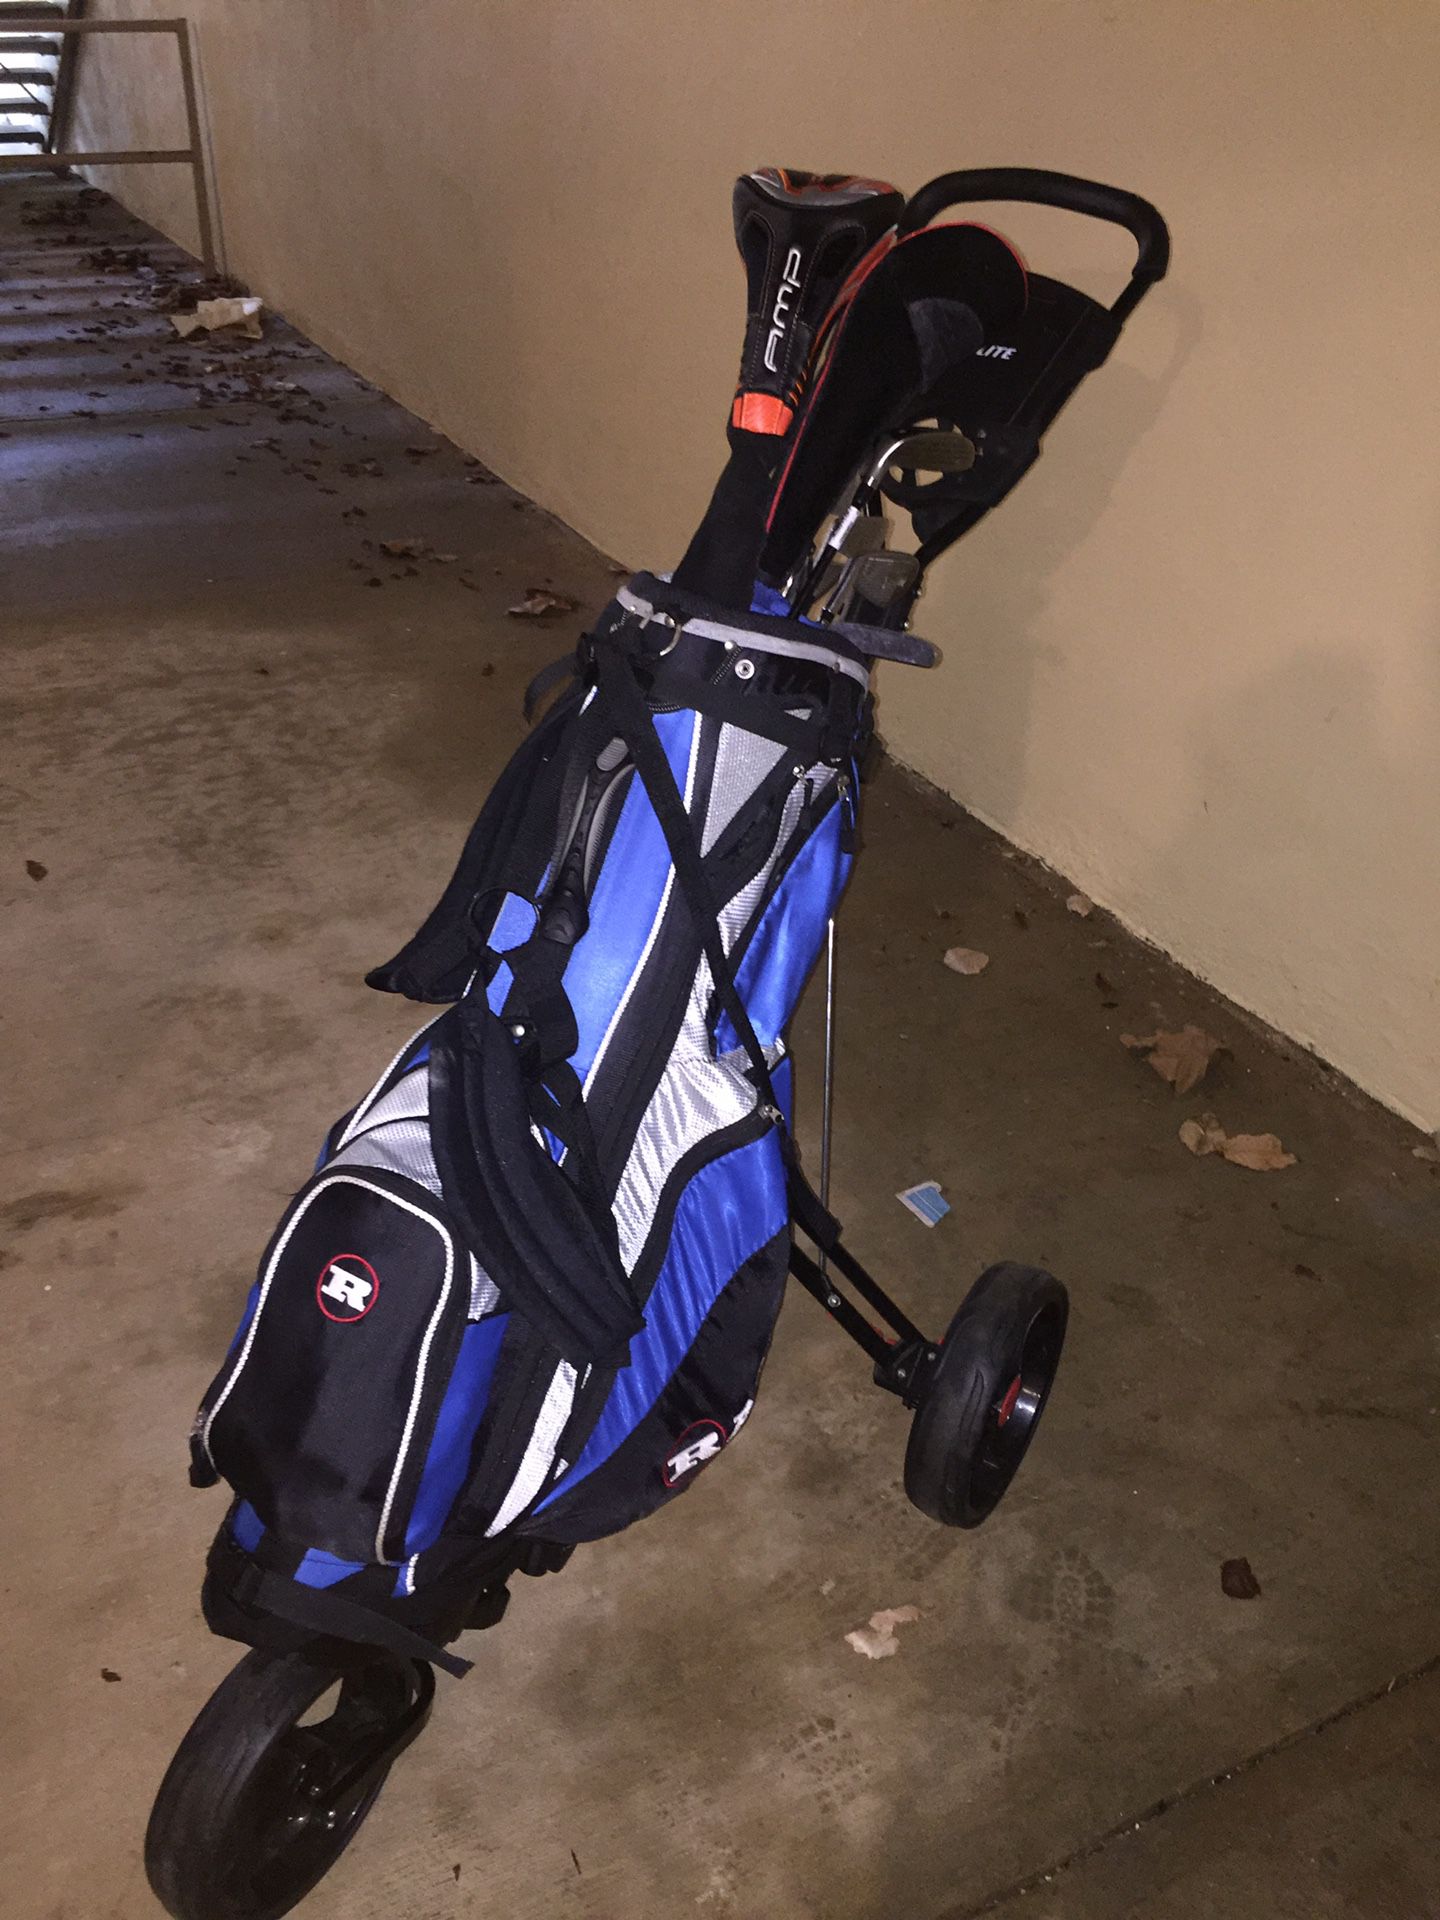 Golfs balls and equipment and cart